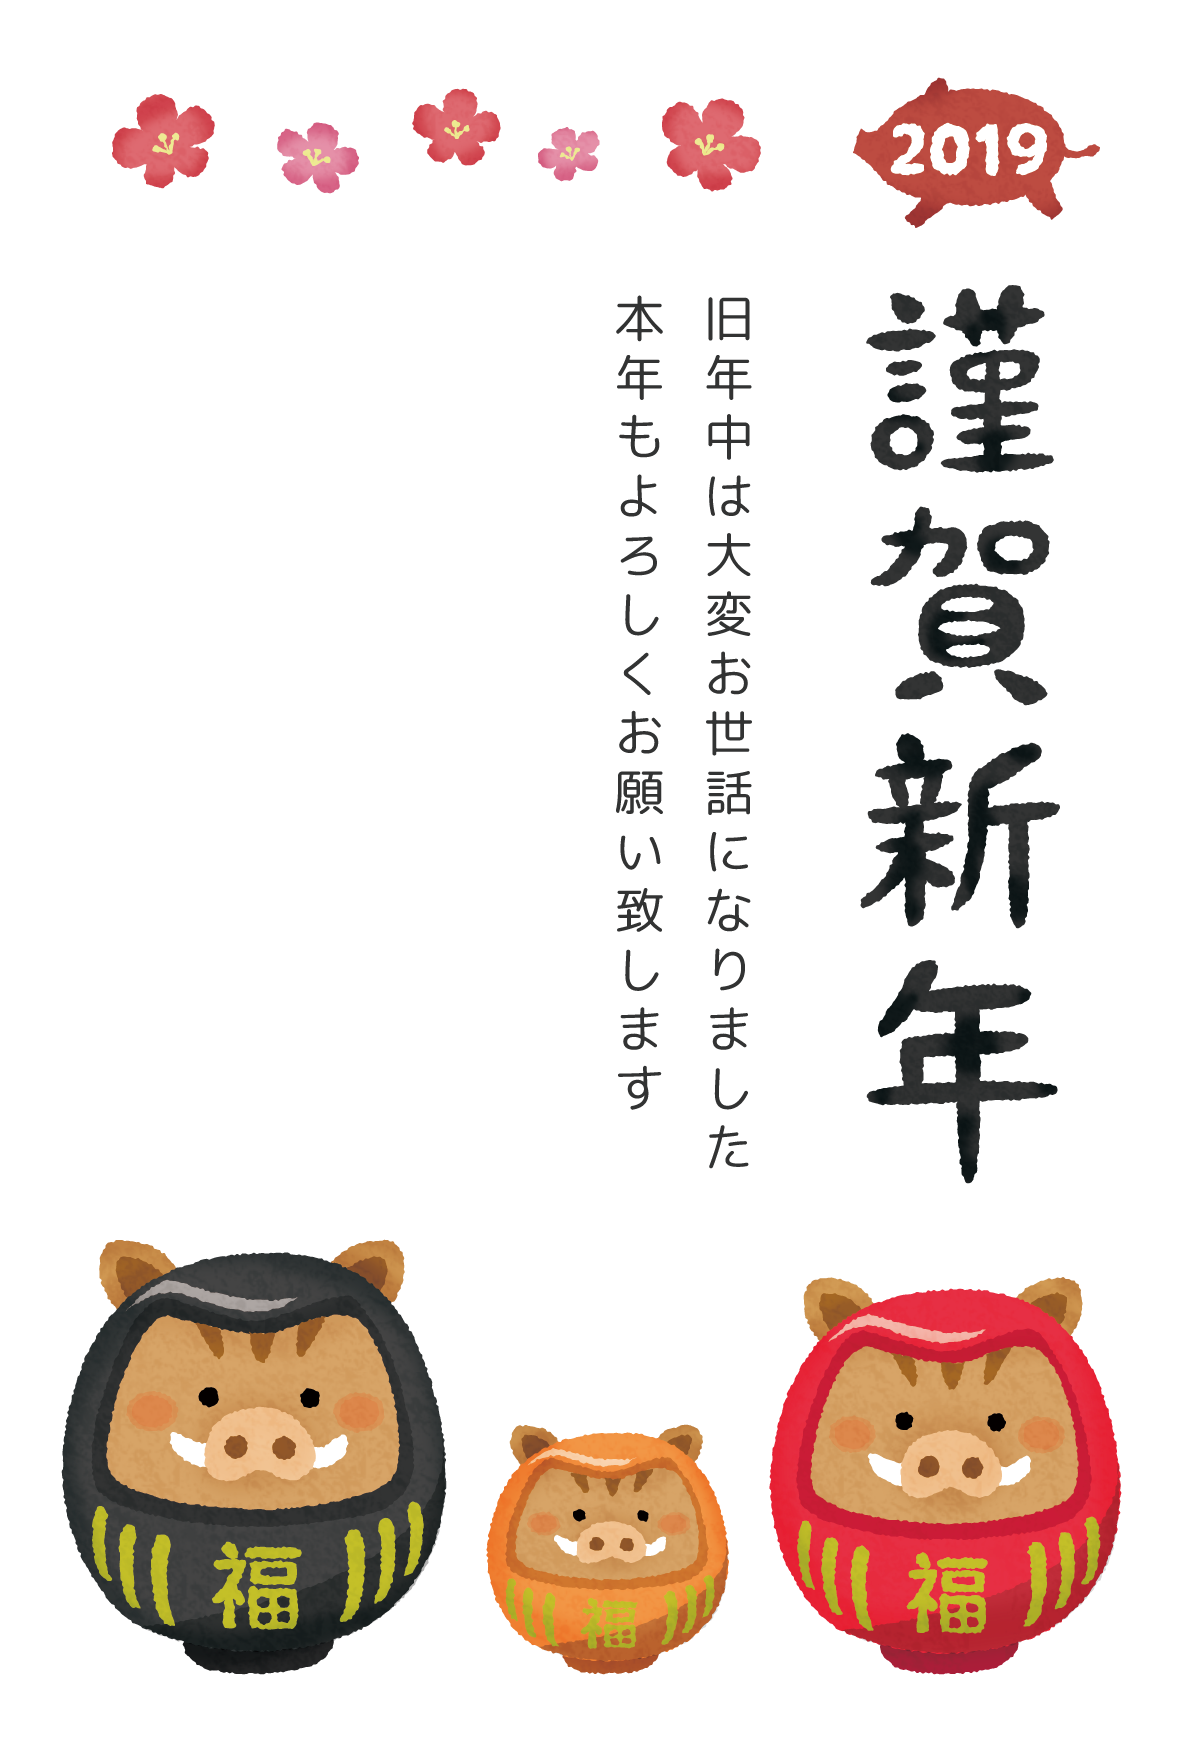 Kingashinnen Card Free Template (Boar daruma couple and child)